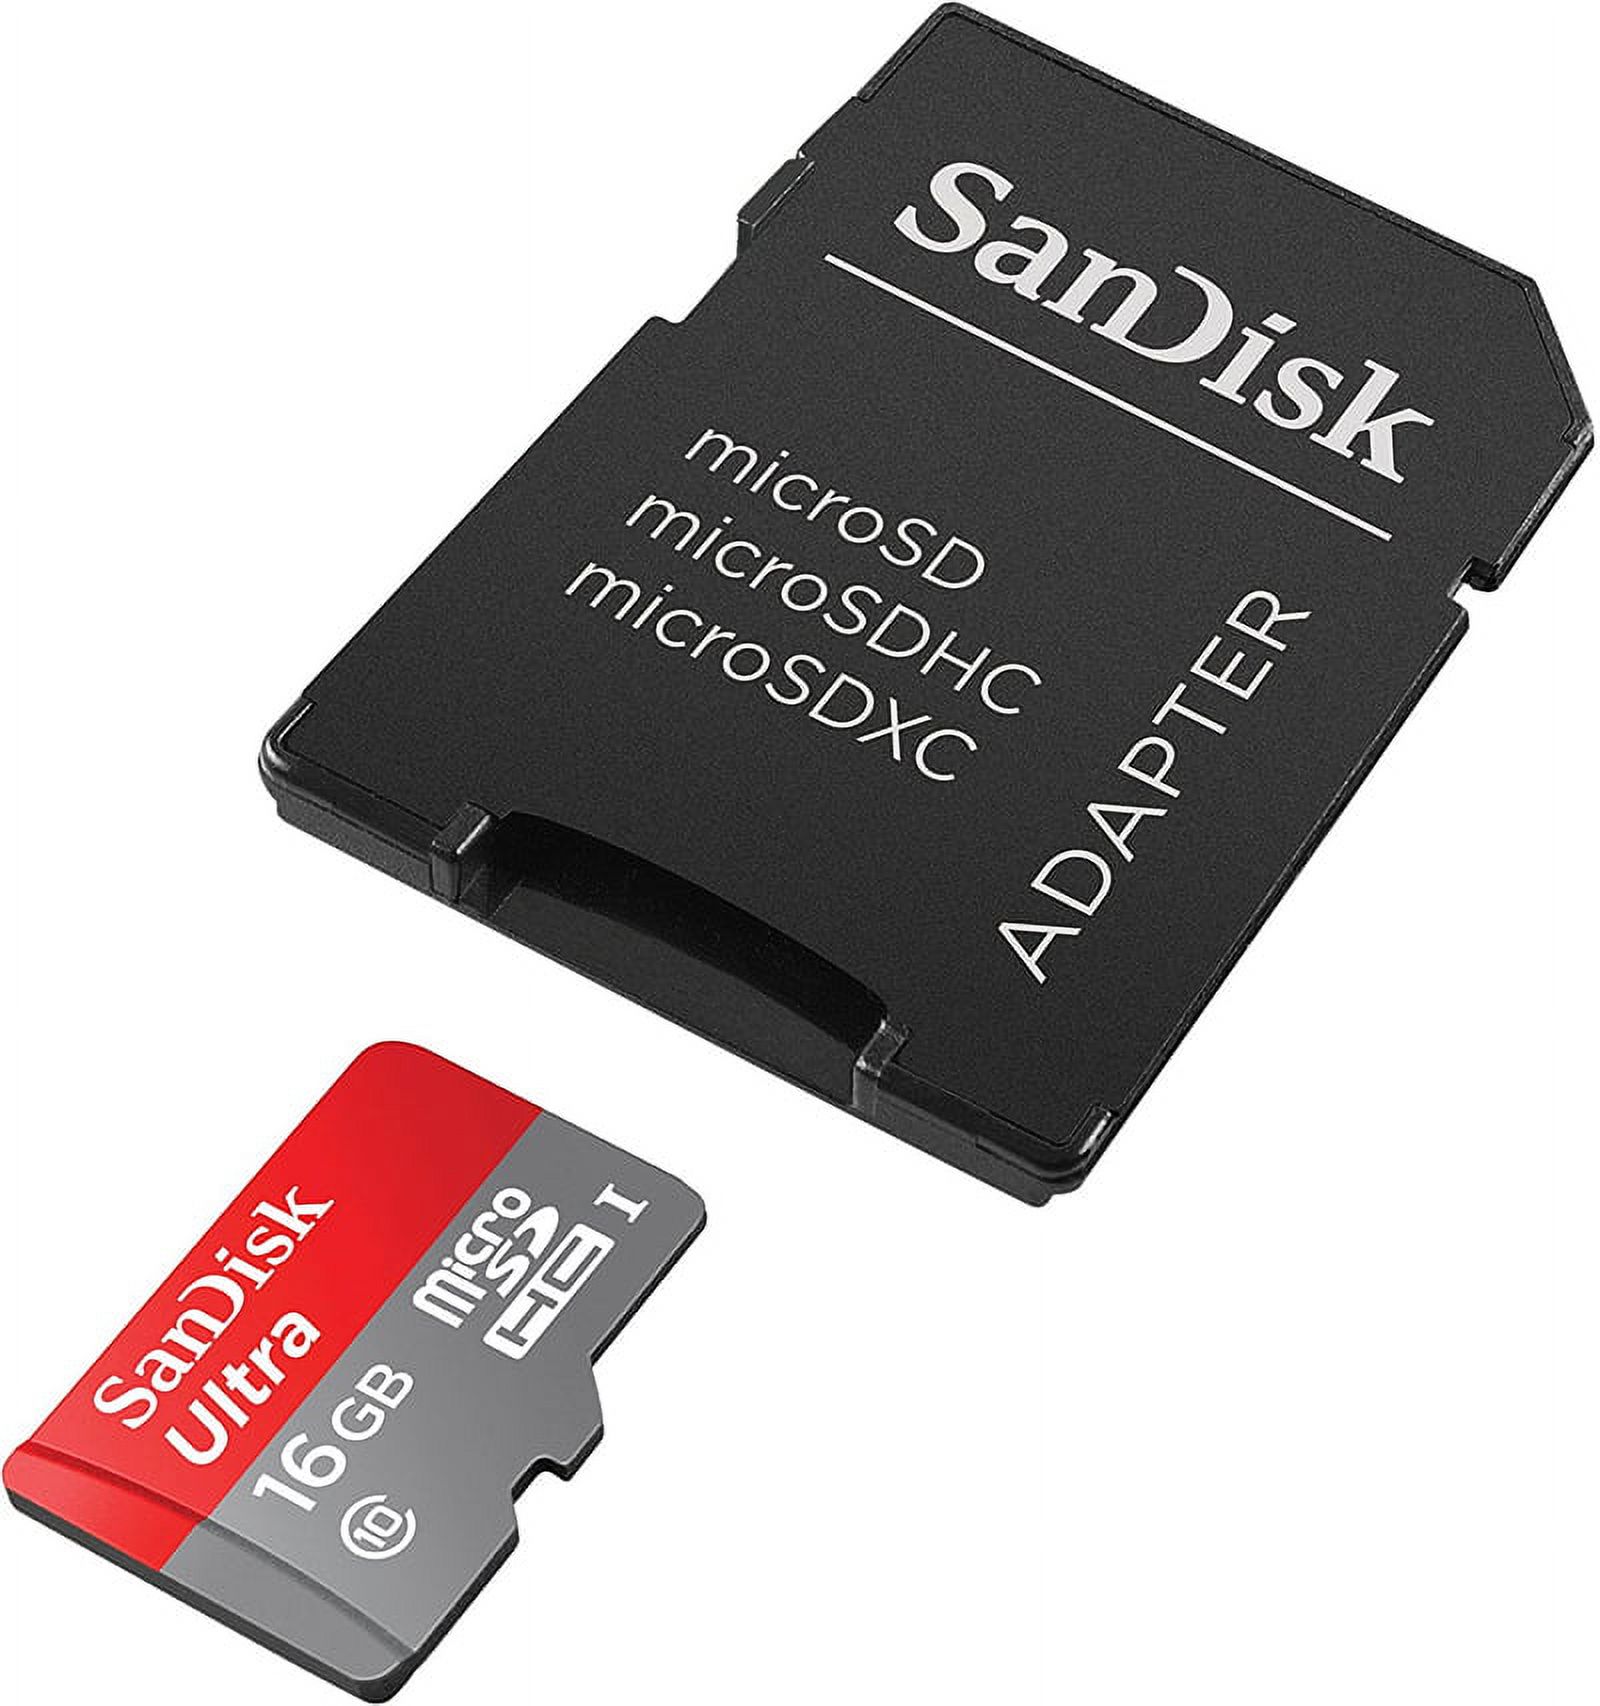 SanDisk Imaging Ultra microSDHC 16GB UHS-I Memory Card - image 2 of 2